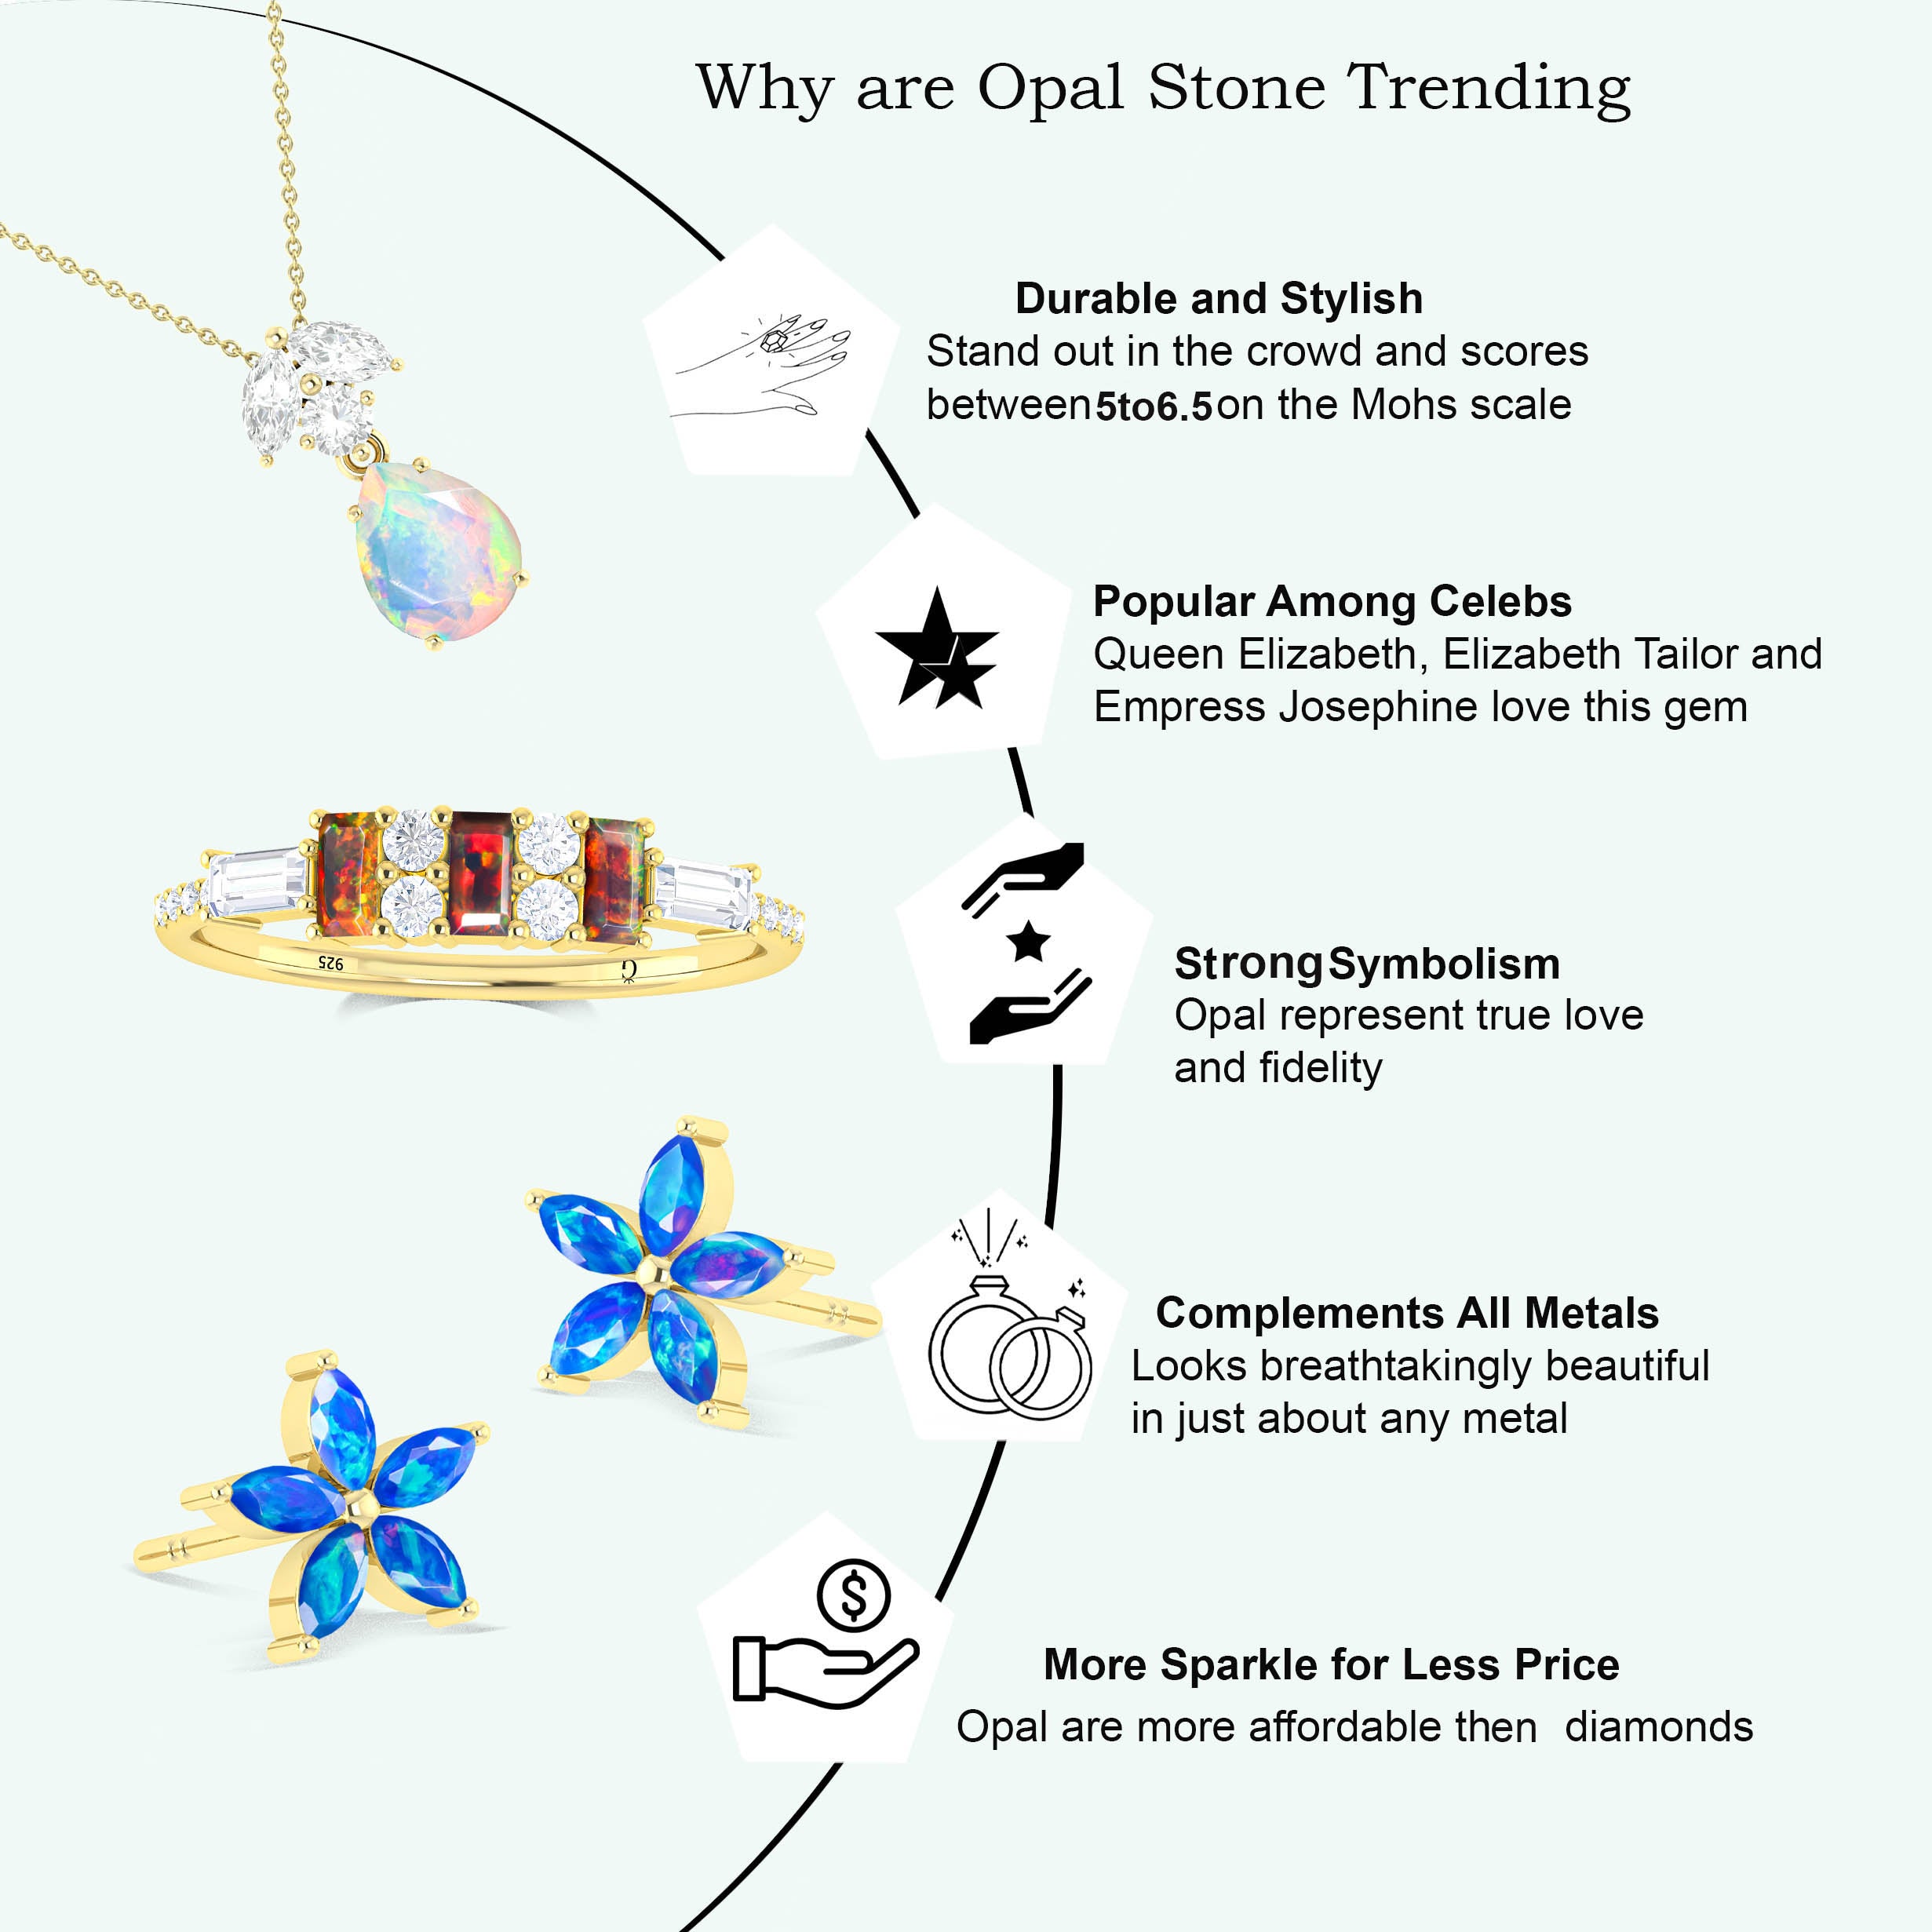 Natural Black Opal Long Drop Stud Earring